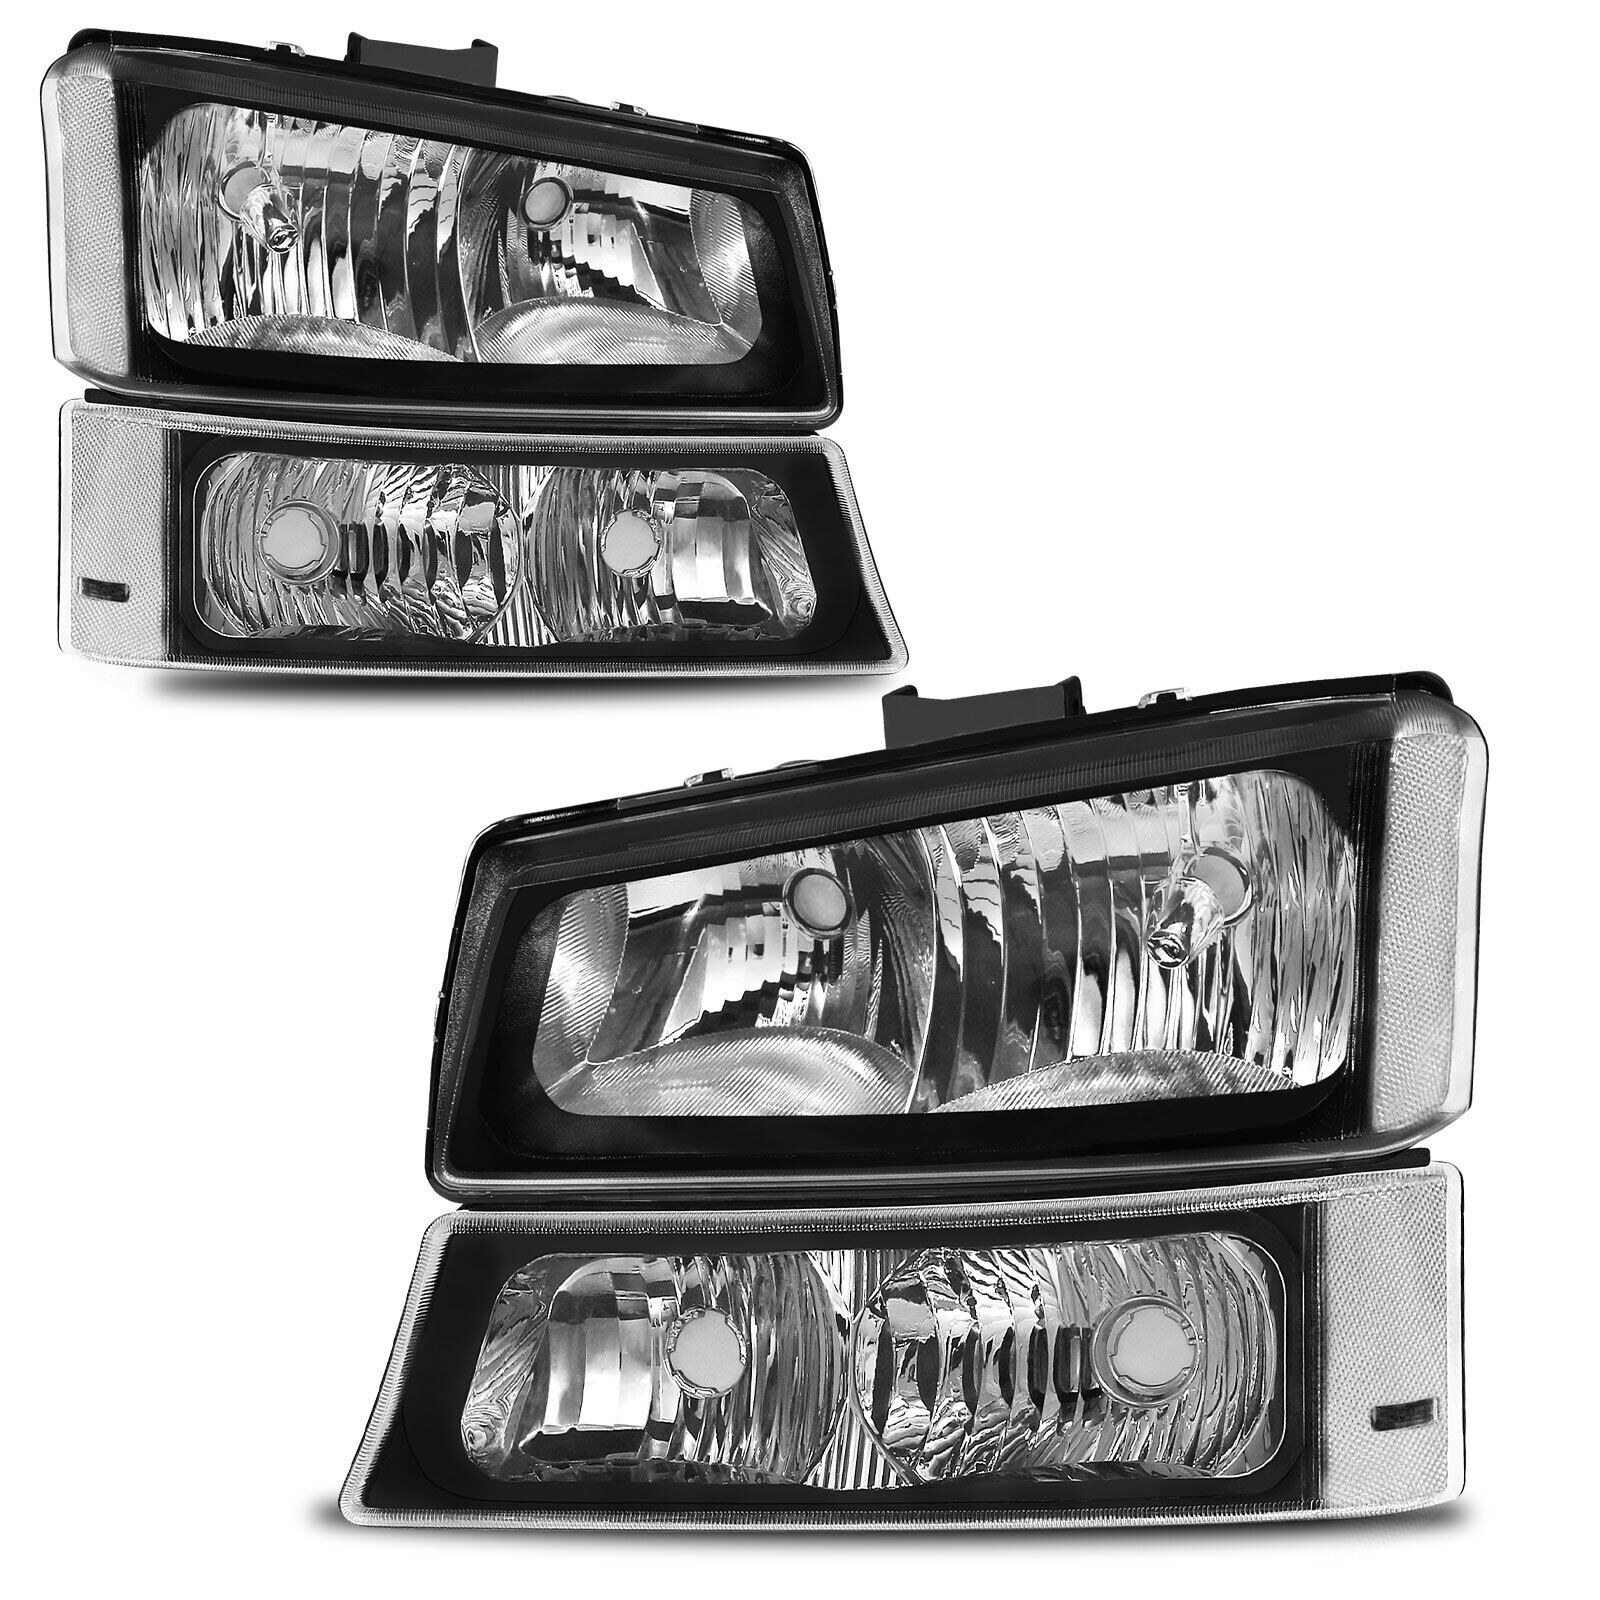 For 2003-2007 Chevy Silverado Avalance 1500 Black Headlight + Signal Bumper Lamp